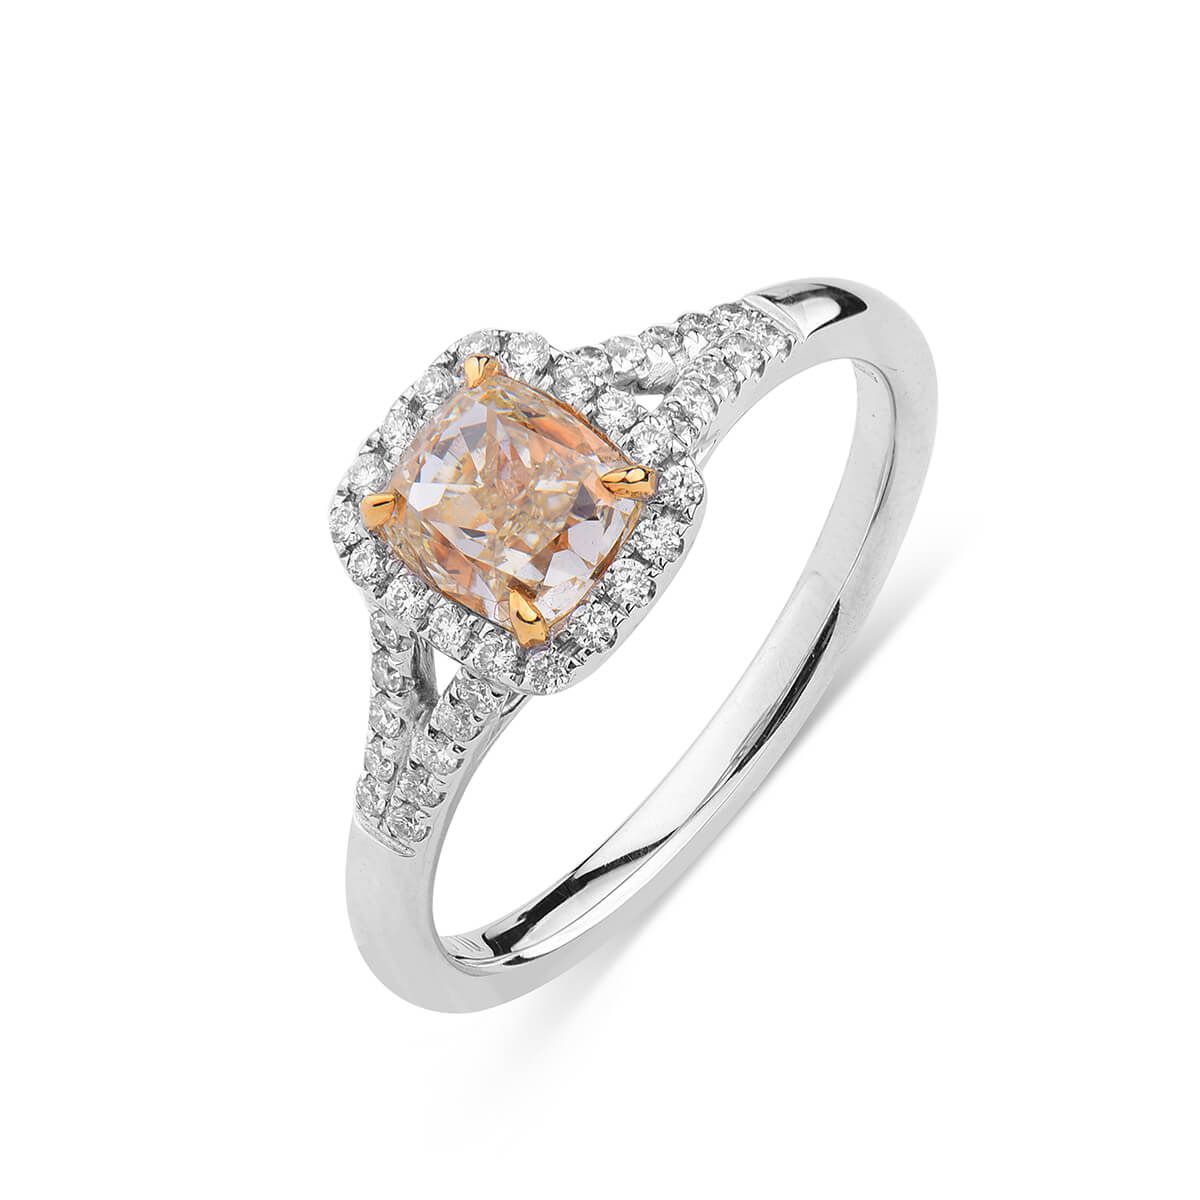 Fancy Light Yellow Diamond Ring, 1.19 Ct. TW, Cushion shape, EG_Lab Certified, J520142